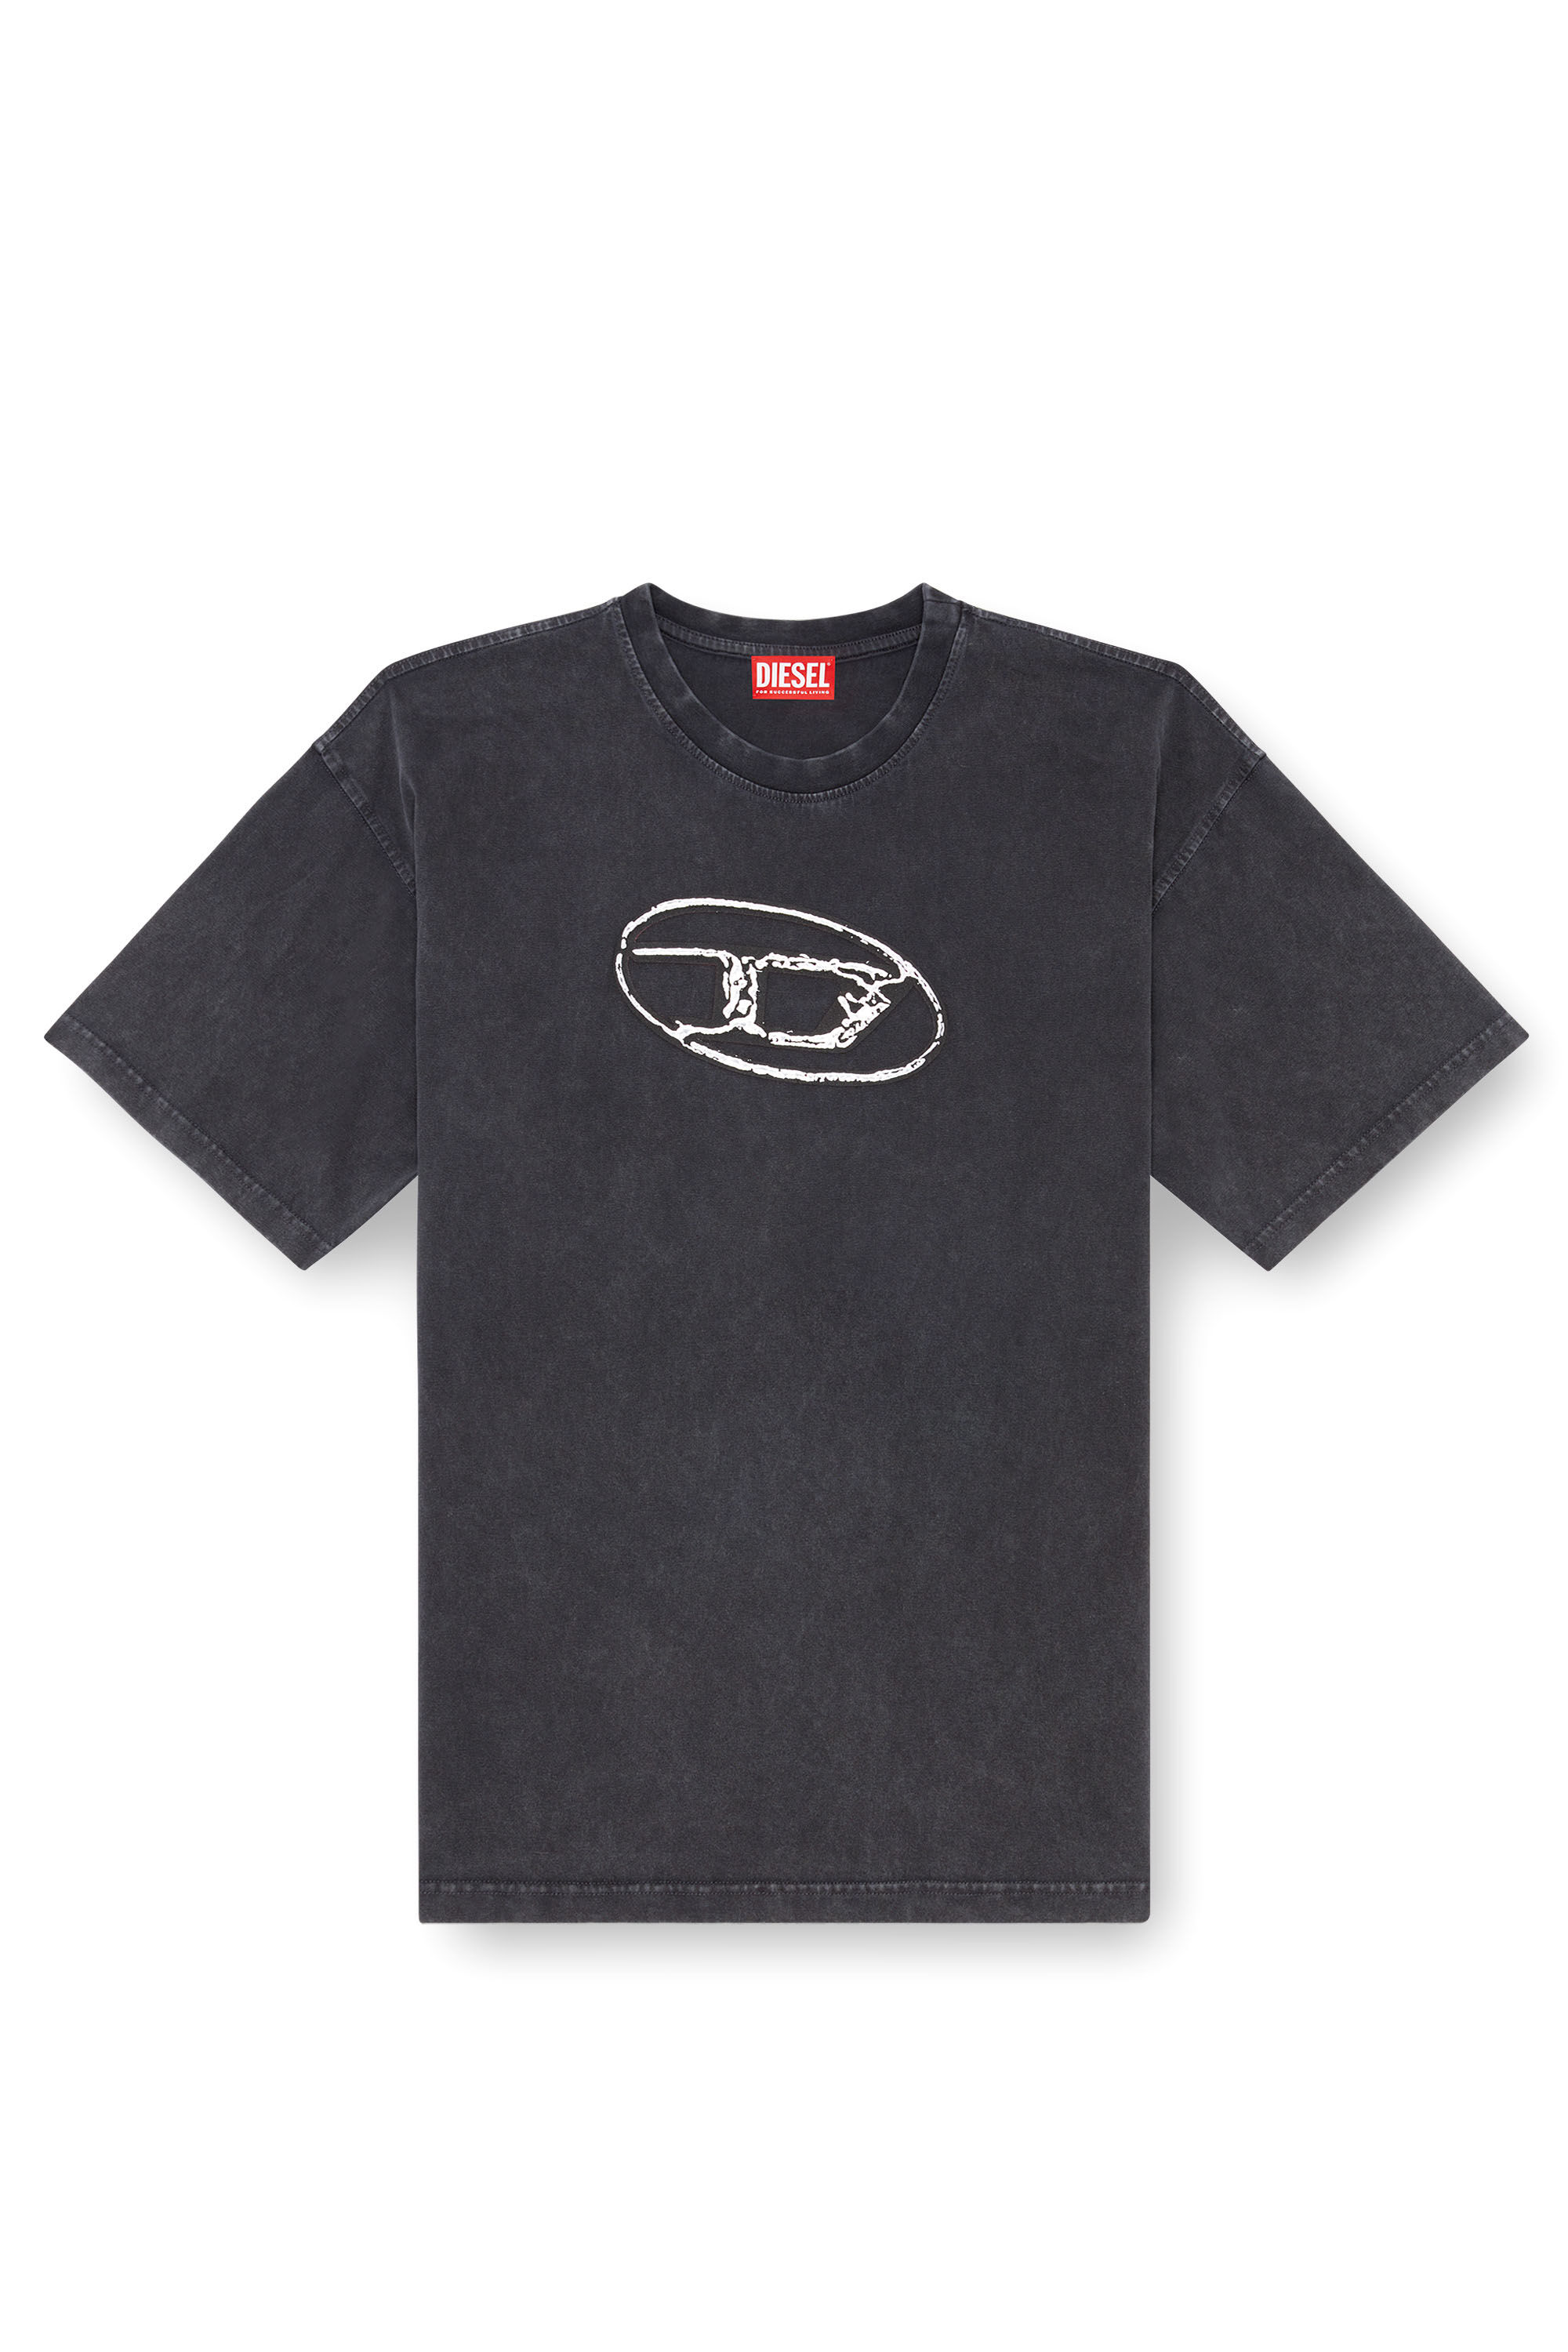 Diesel - T-BOXT-Q22, Hombre Camiseta desteñida con estampado Oval D in Negro - Image 2